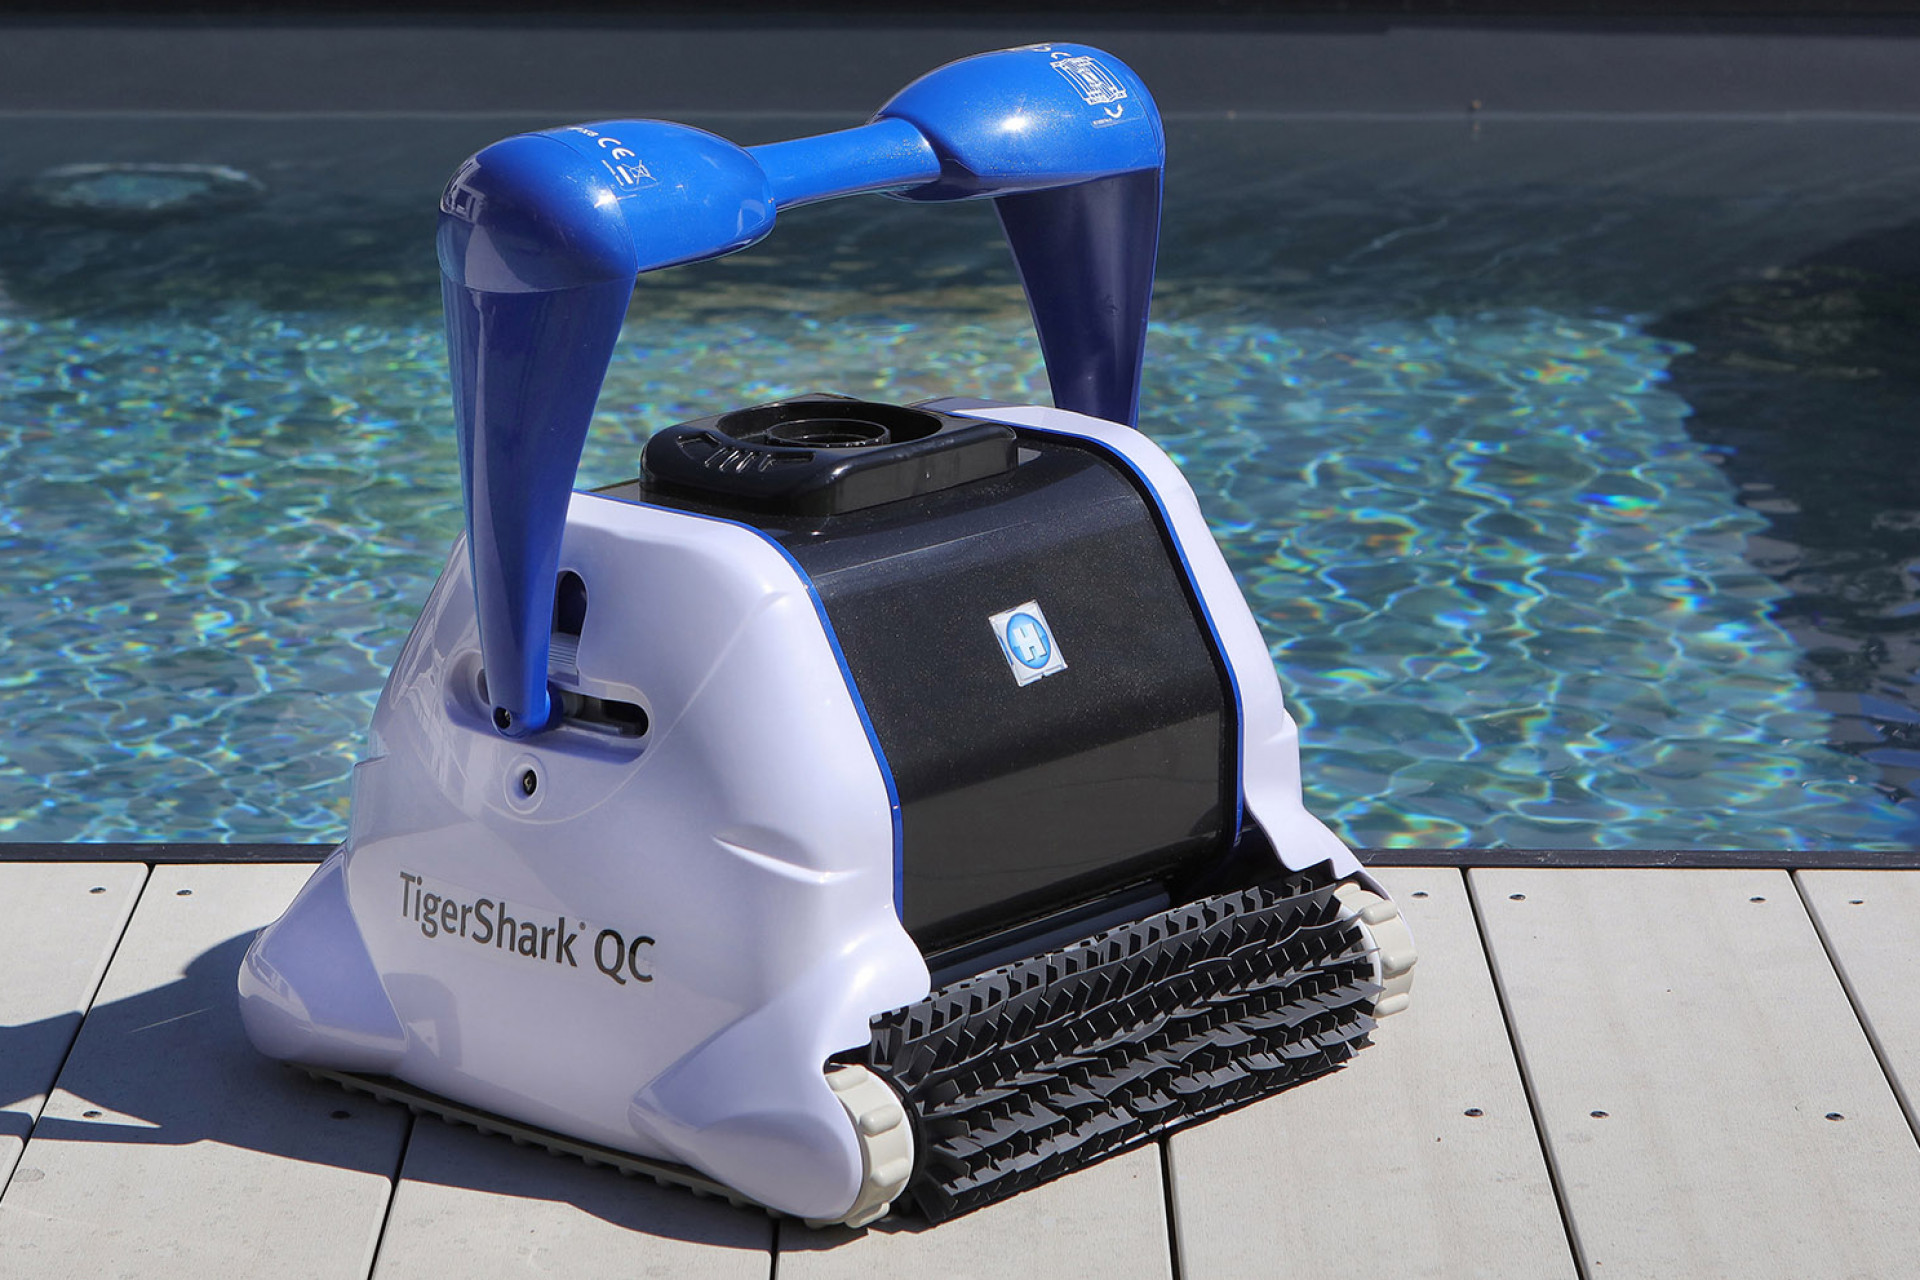 Le robot TigerShark QC, de Hayward, au bord d'une piscine propre